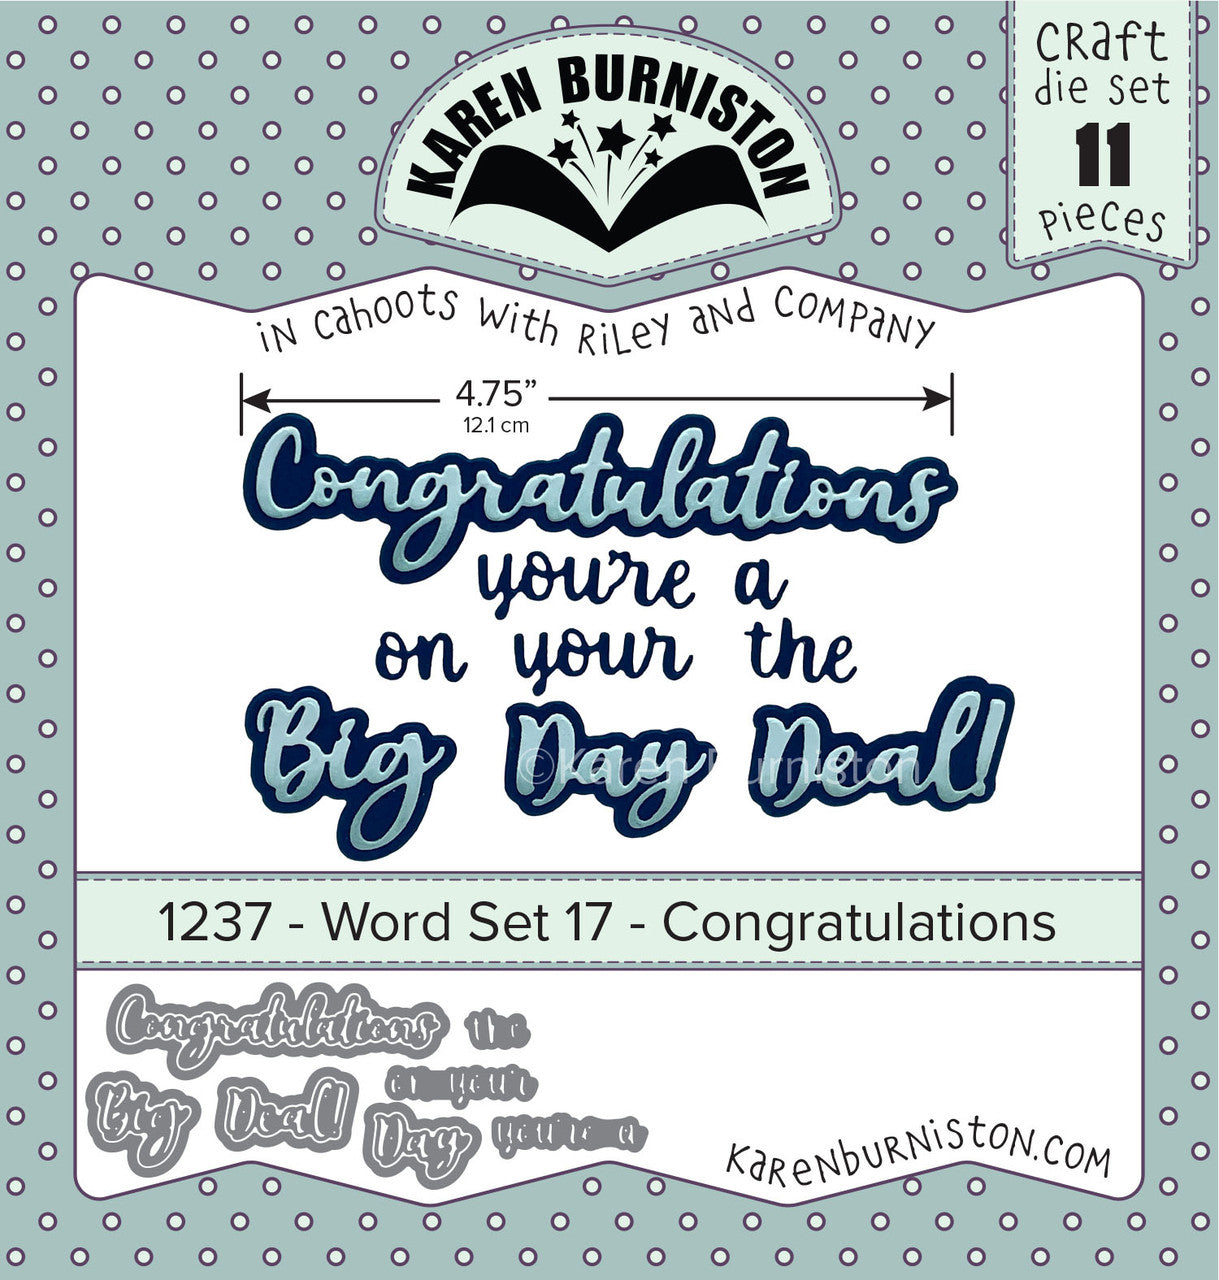 1237 Karen Burniston - Word Set 17 Congratulations